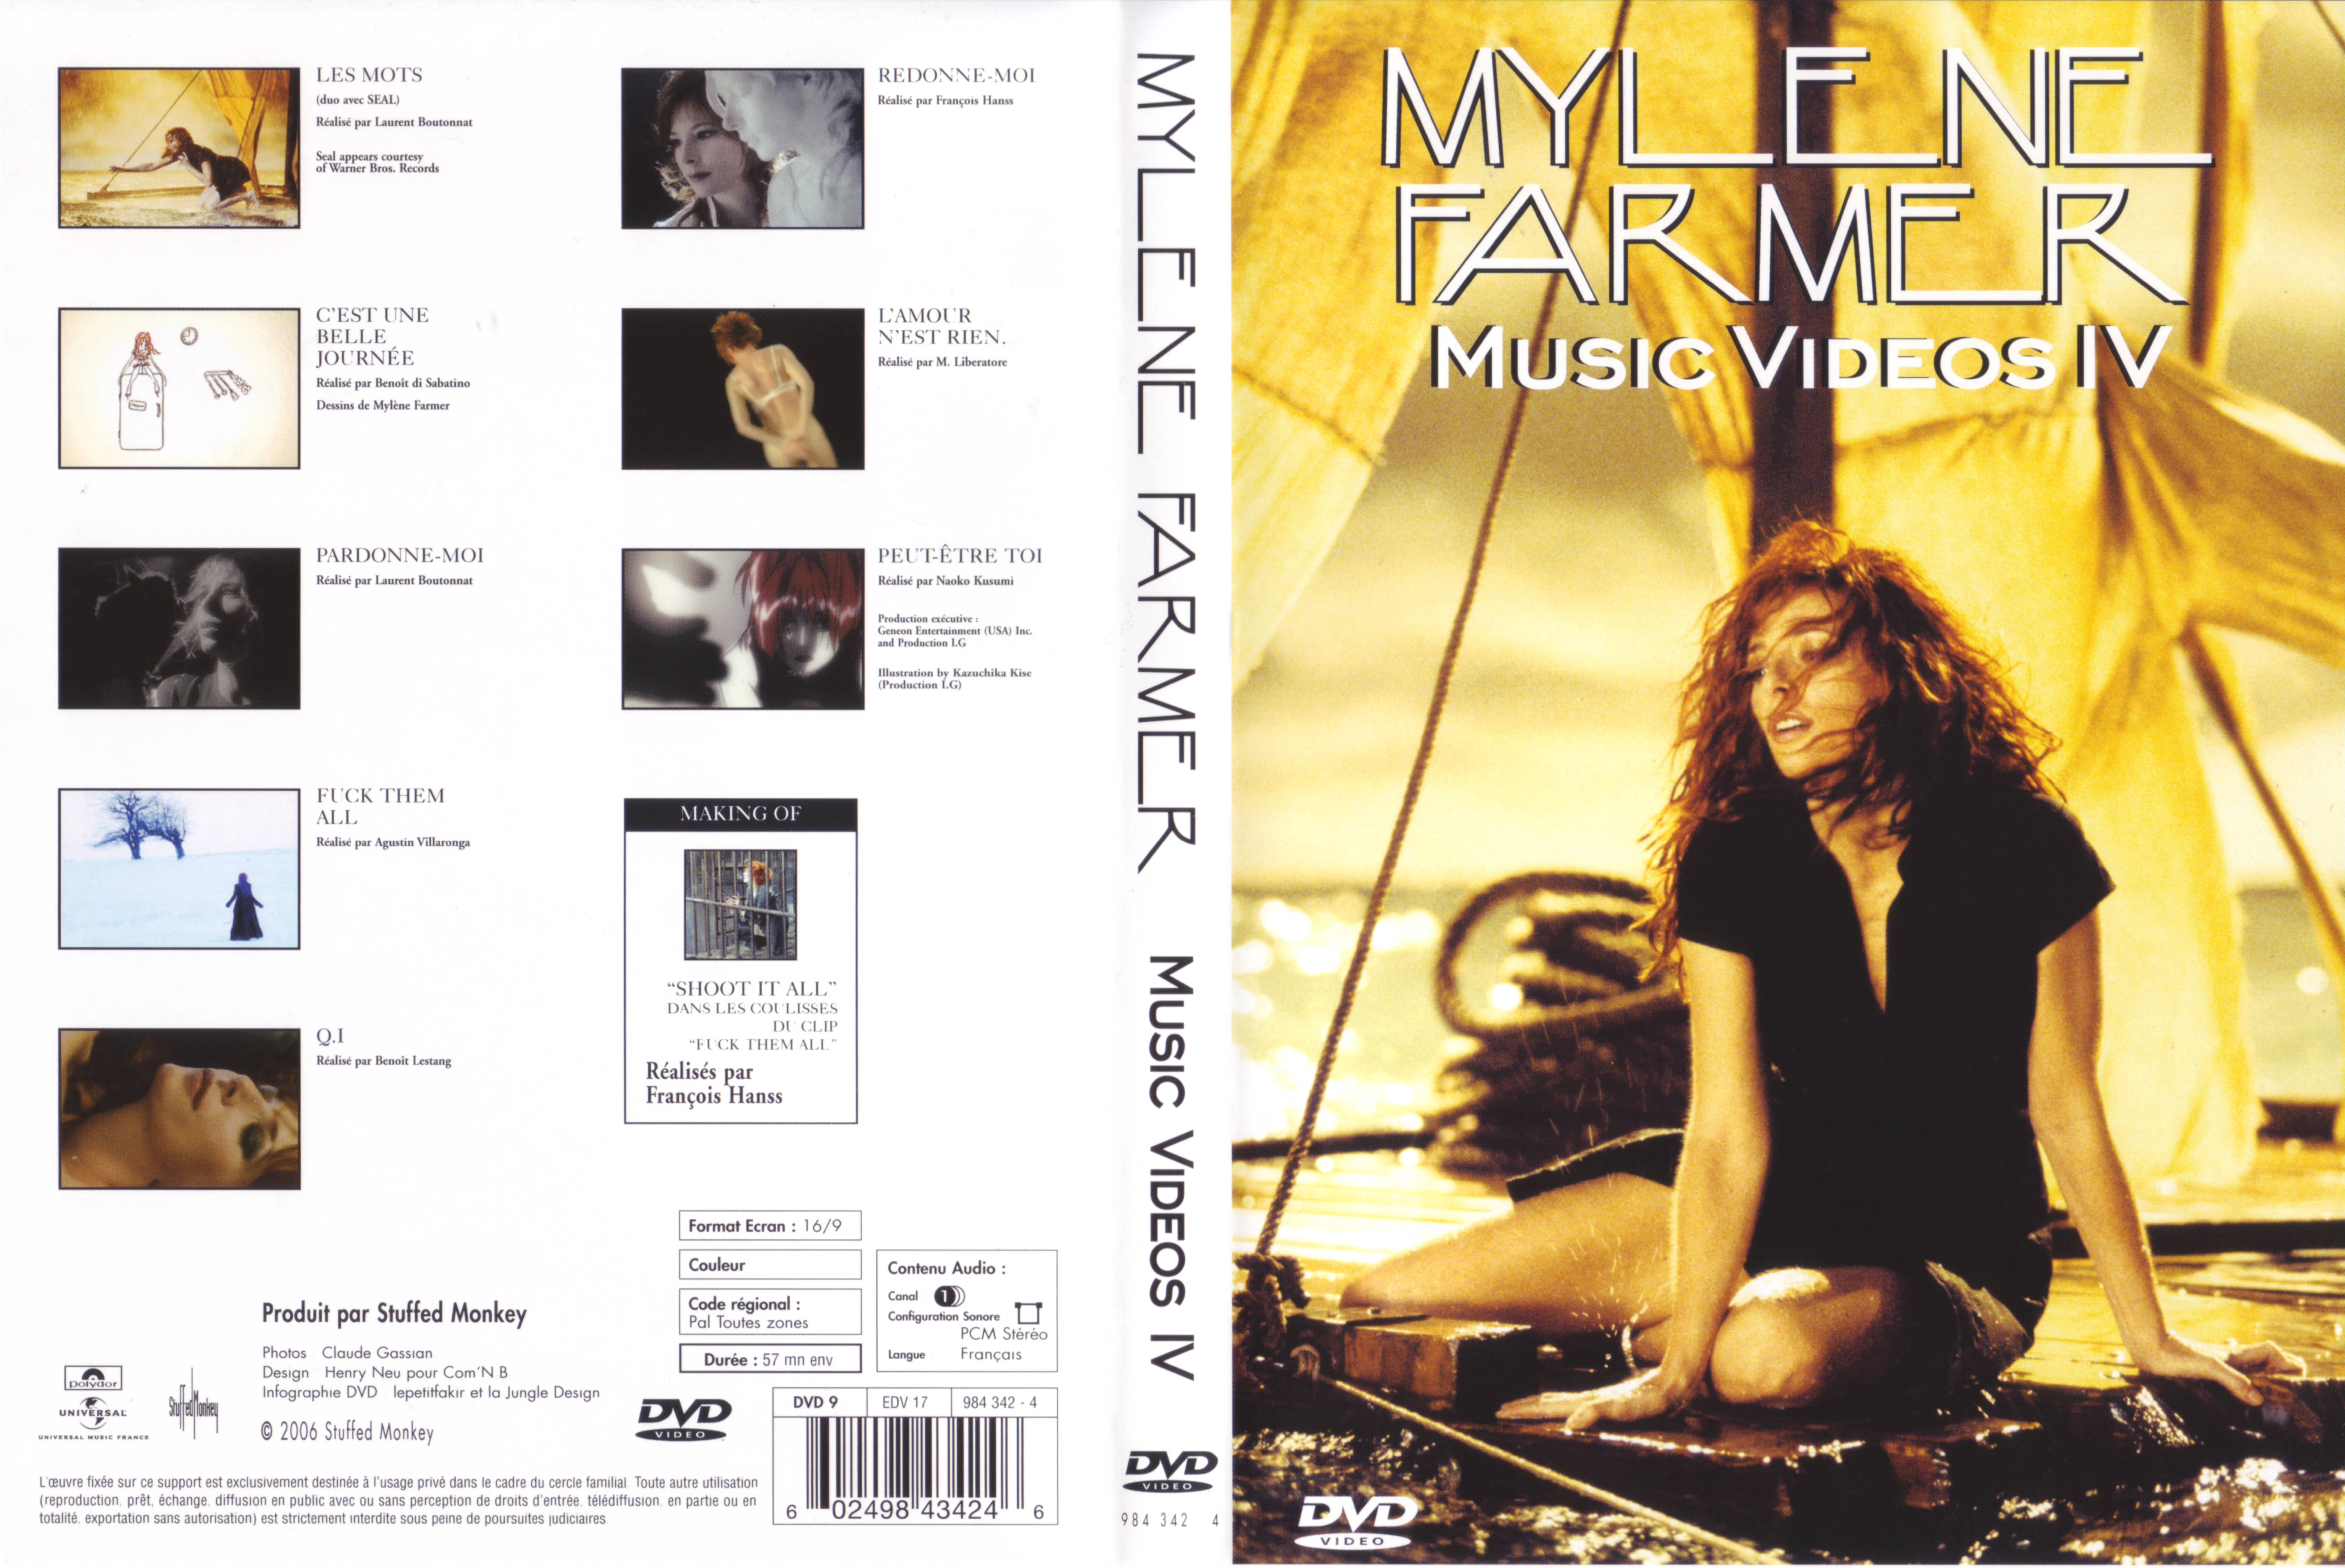 Jaquette DVD Mylene Farmer music video 4